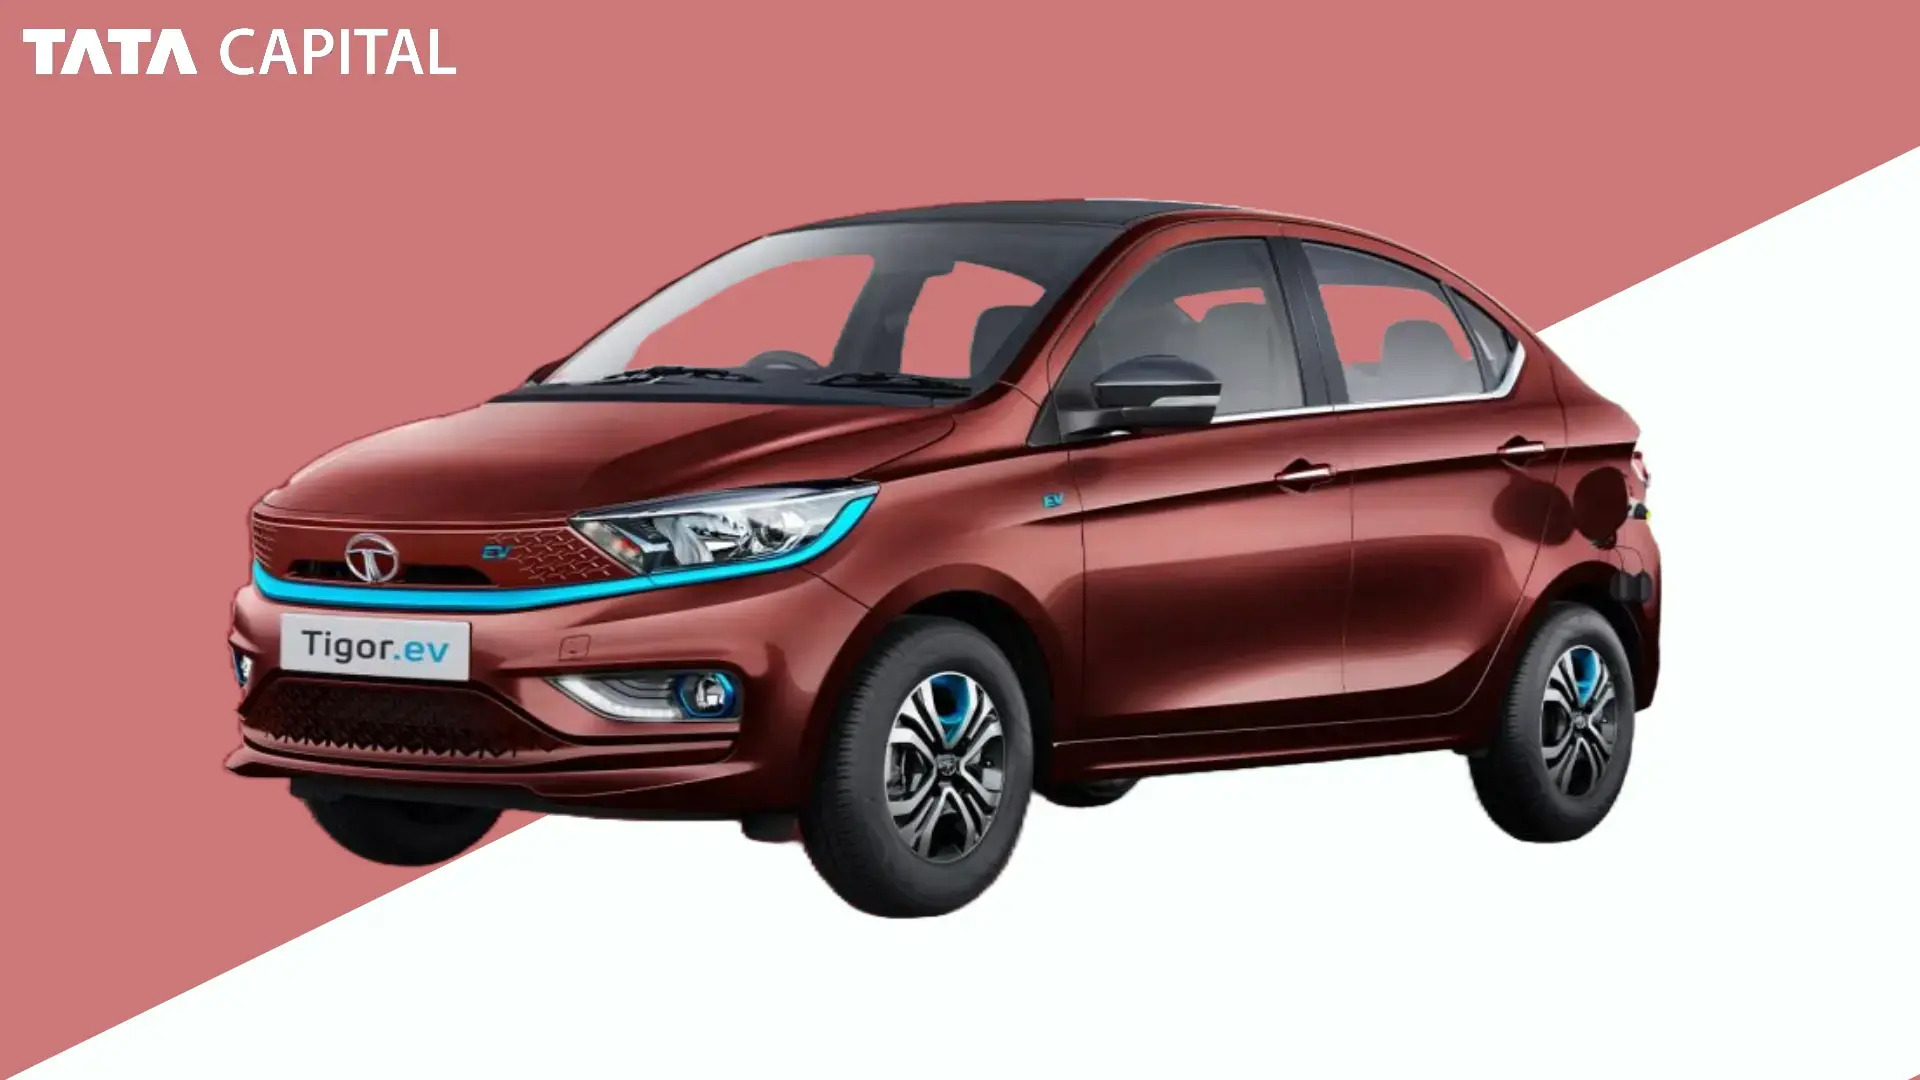 Tata Tigor EV: Eco-Friendly Performance and Features